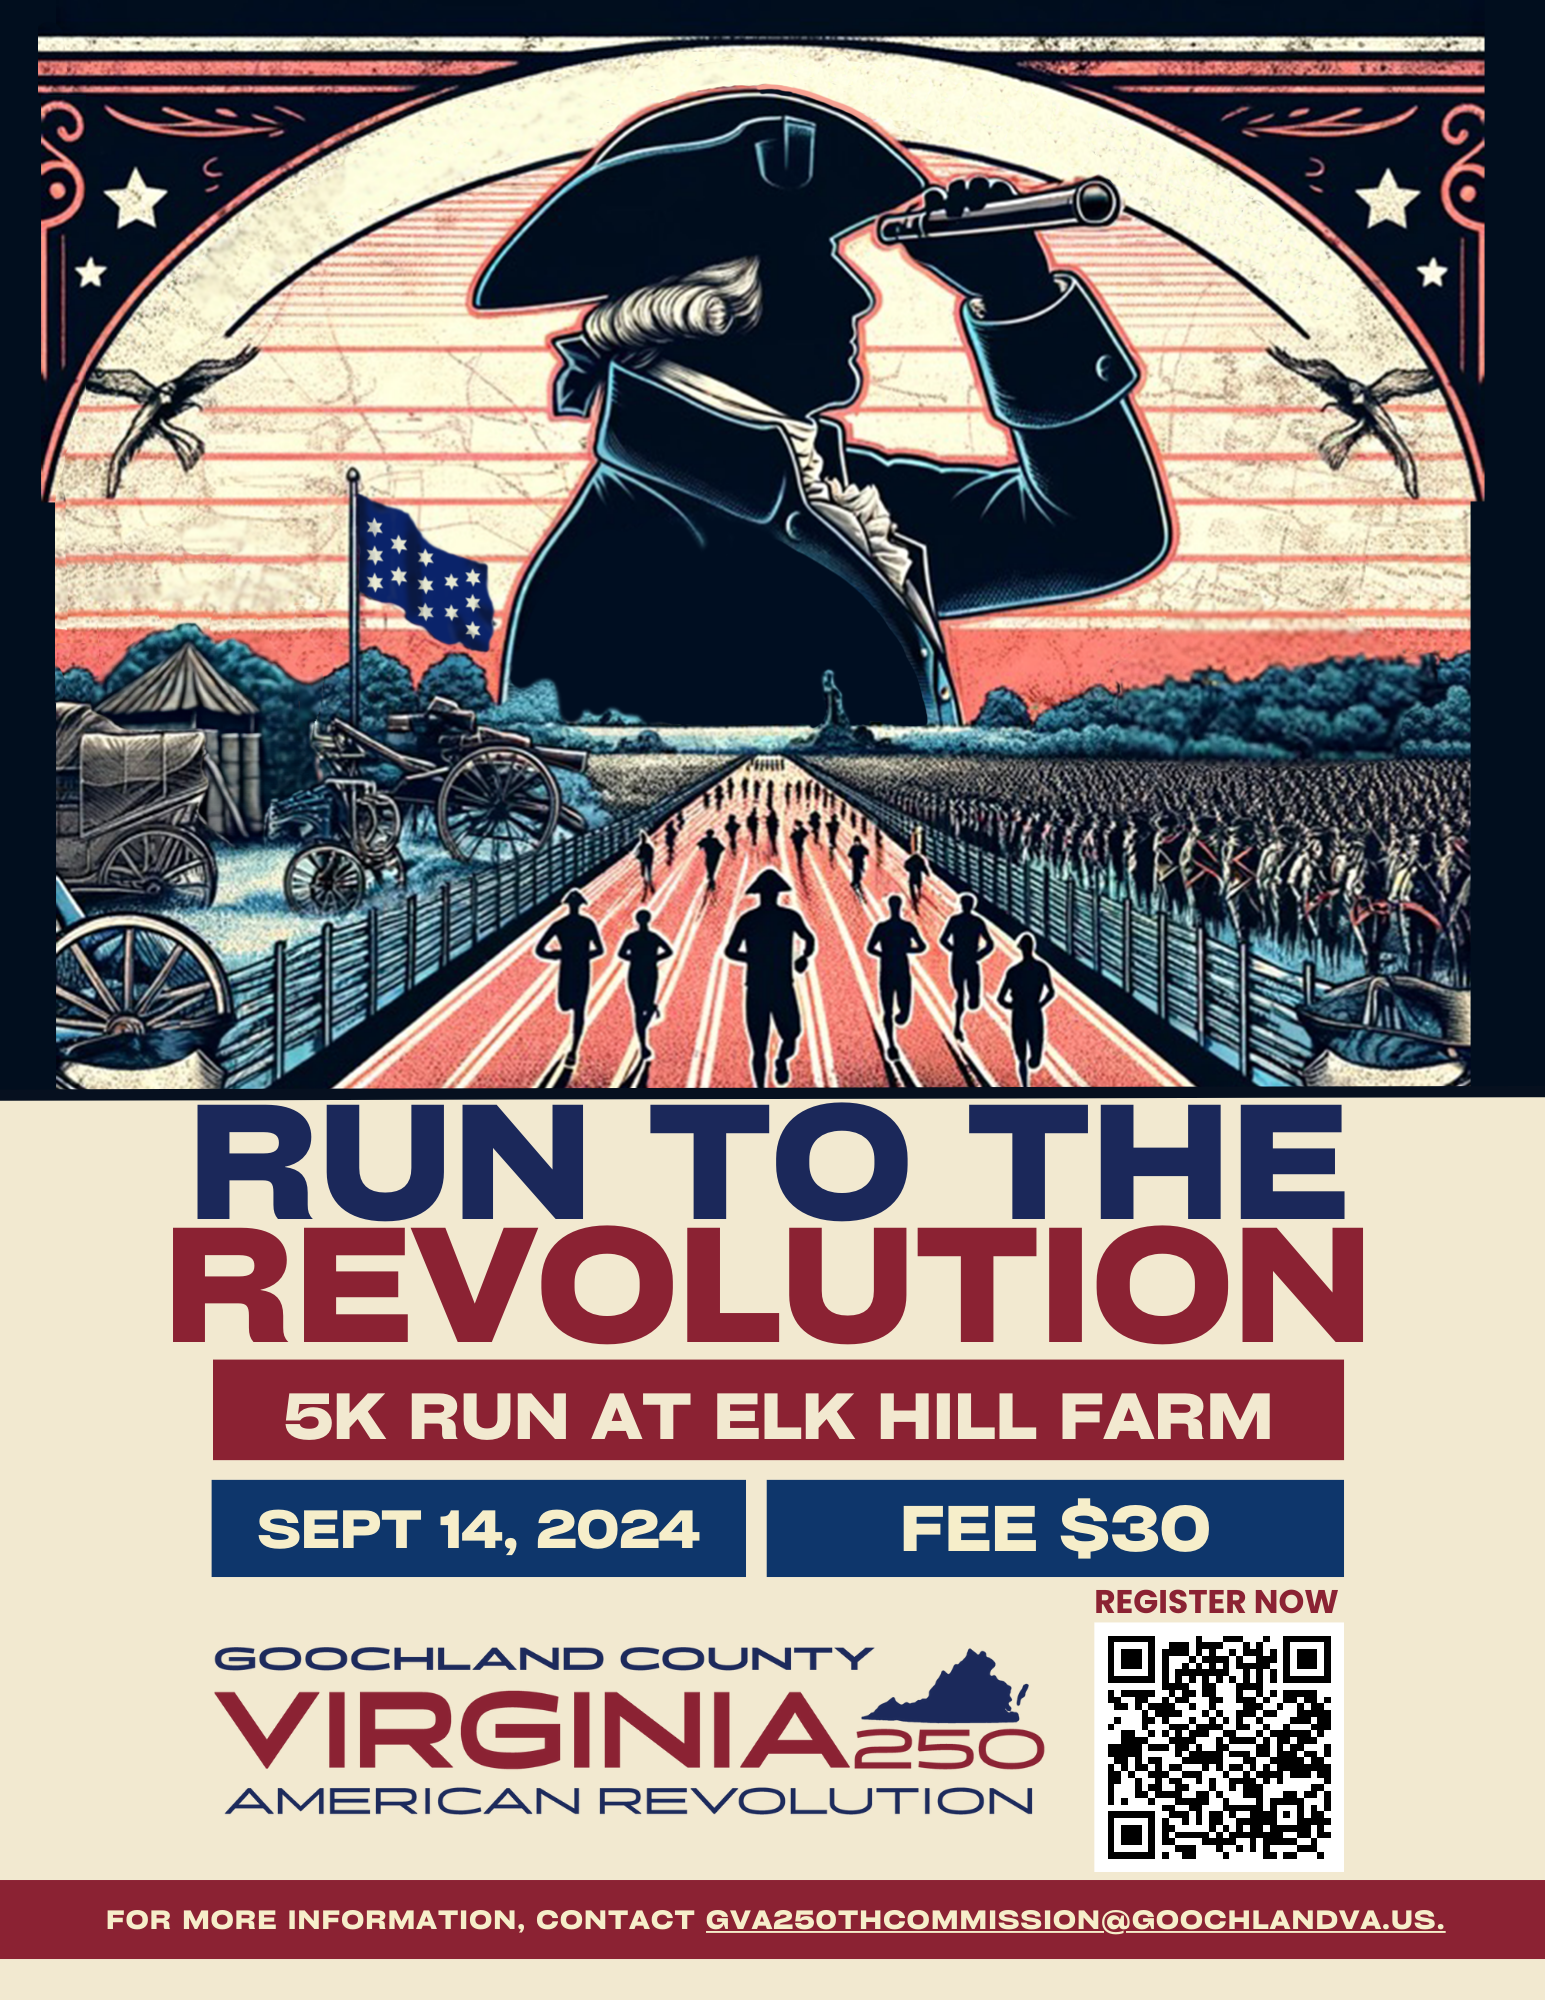 Run to the Revolution 5K